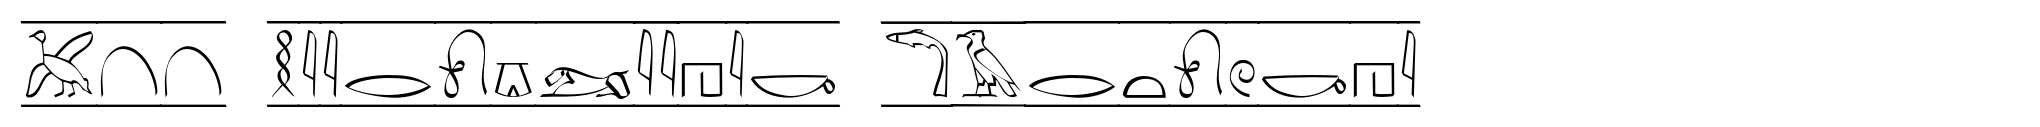 P22 Hieroglyhic Cartouche image